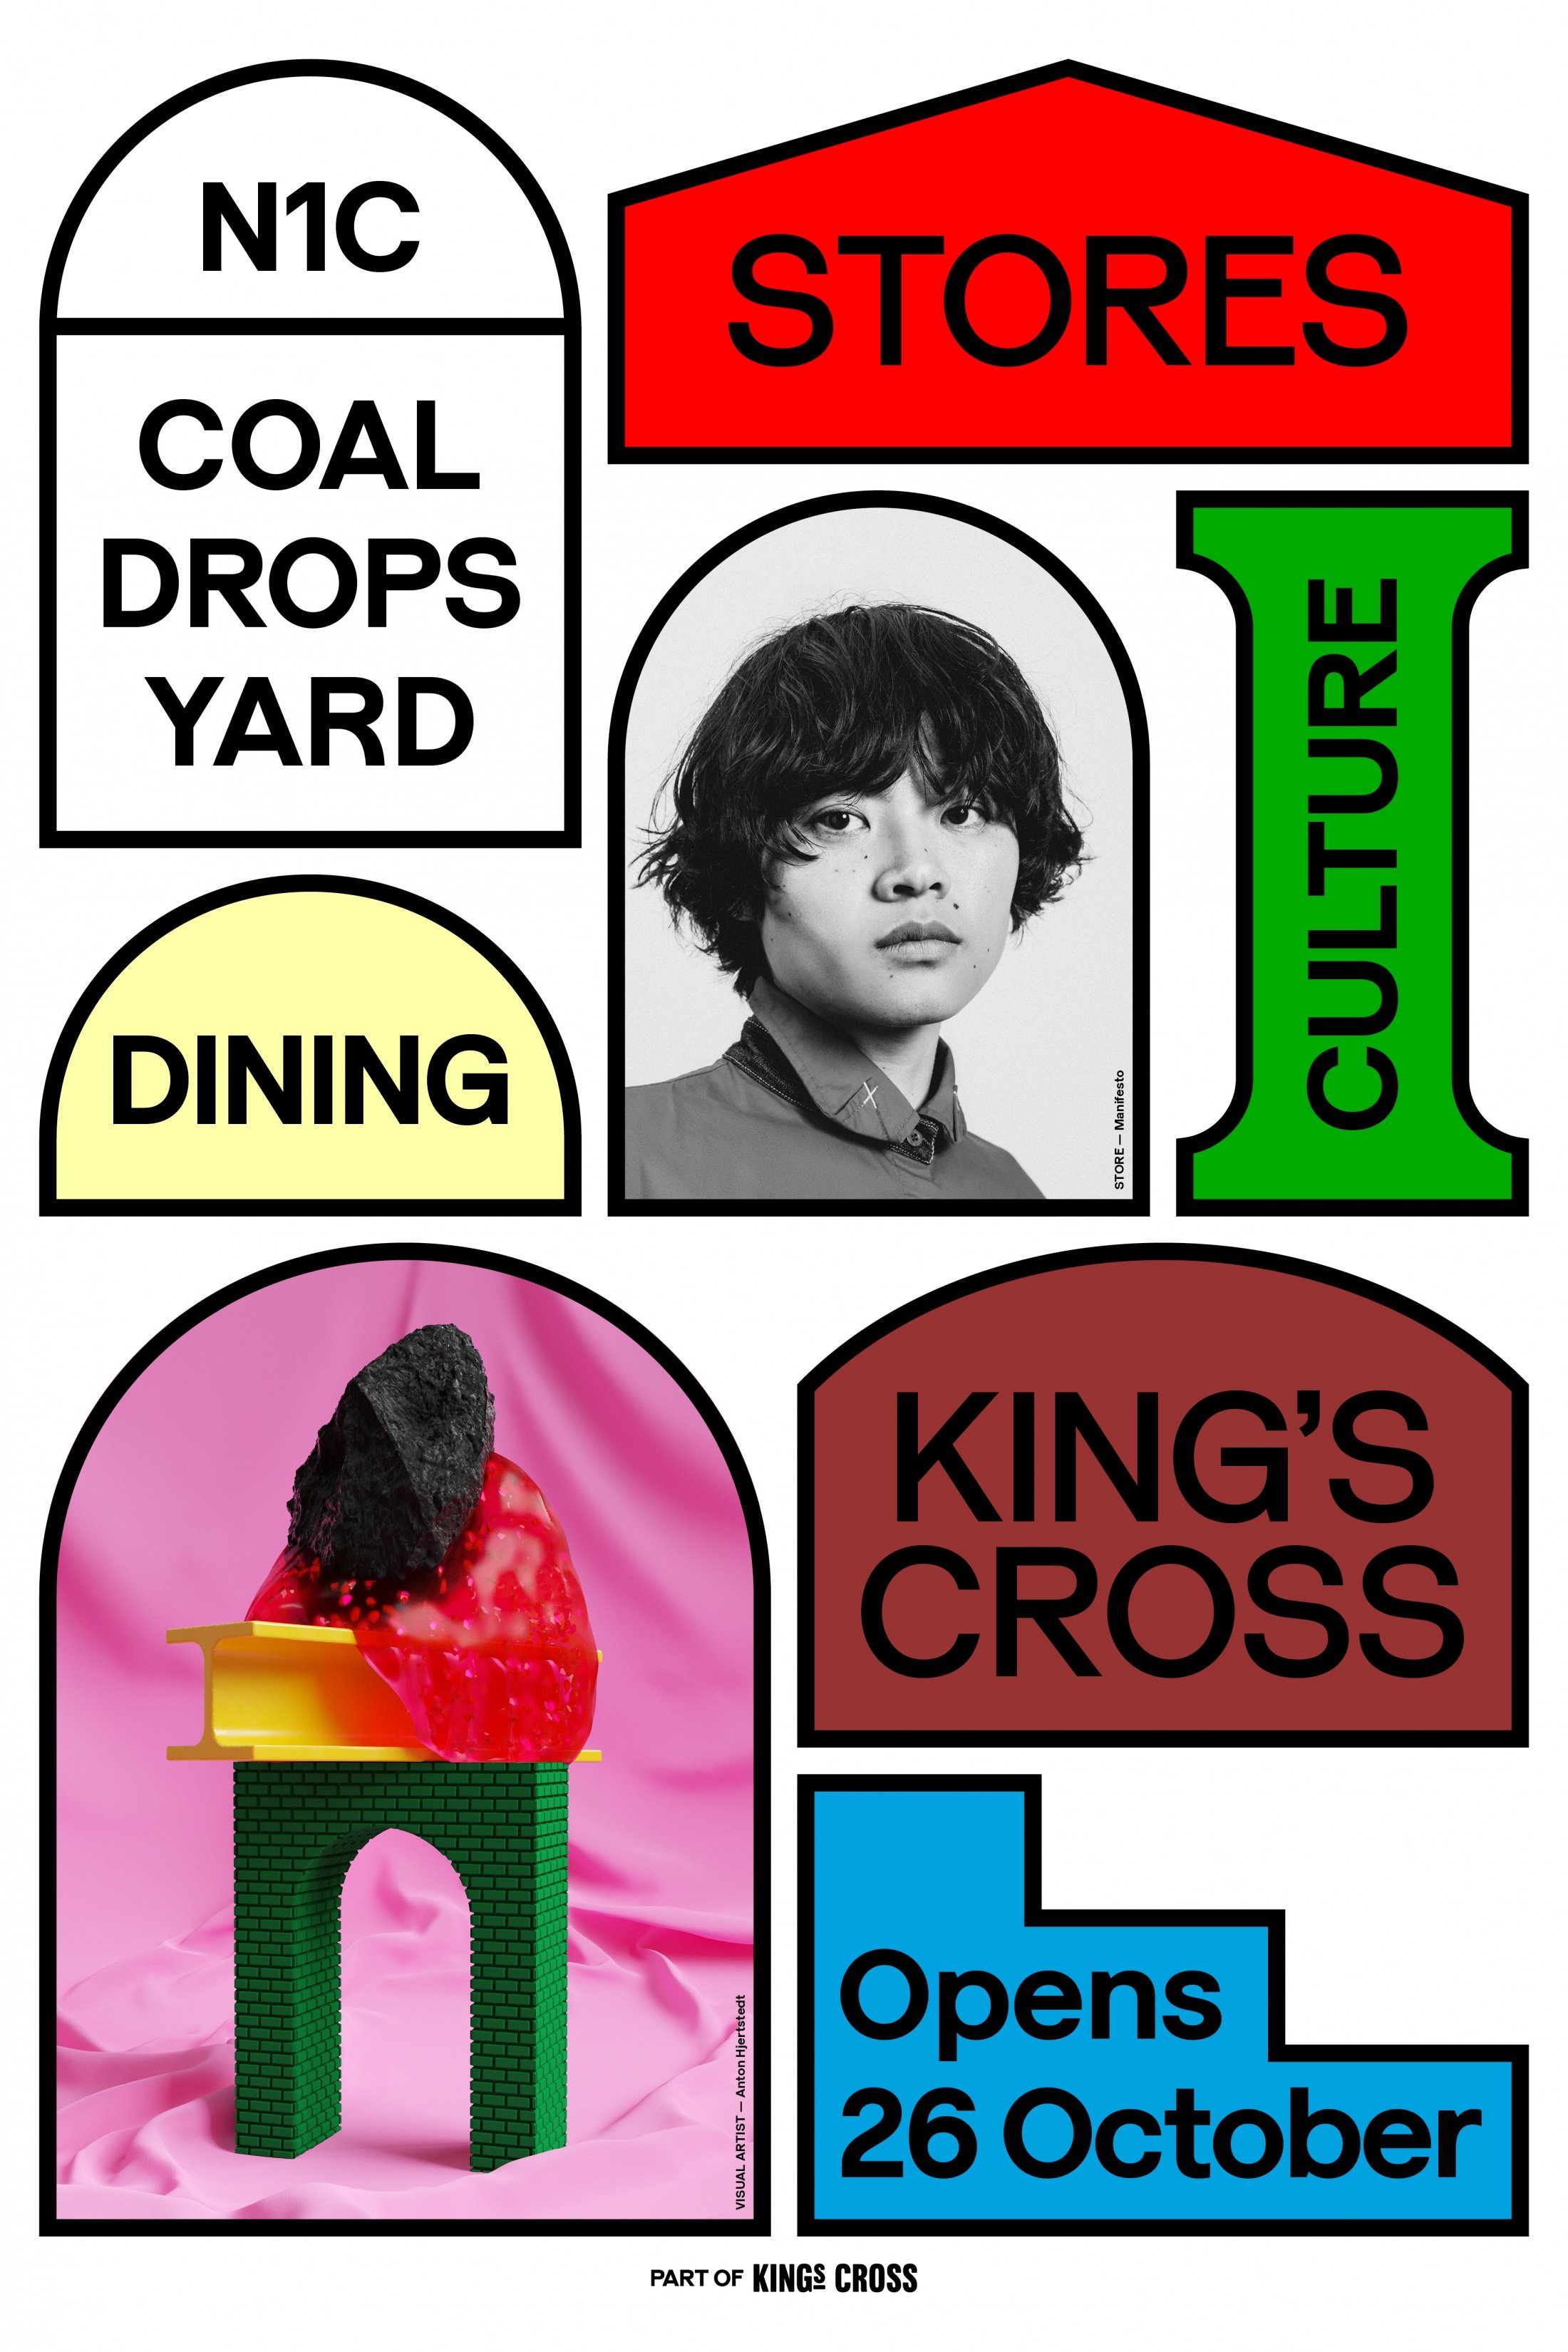 Droga5 visual identity for Coal Drops Yard.